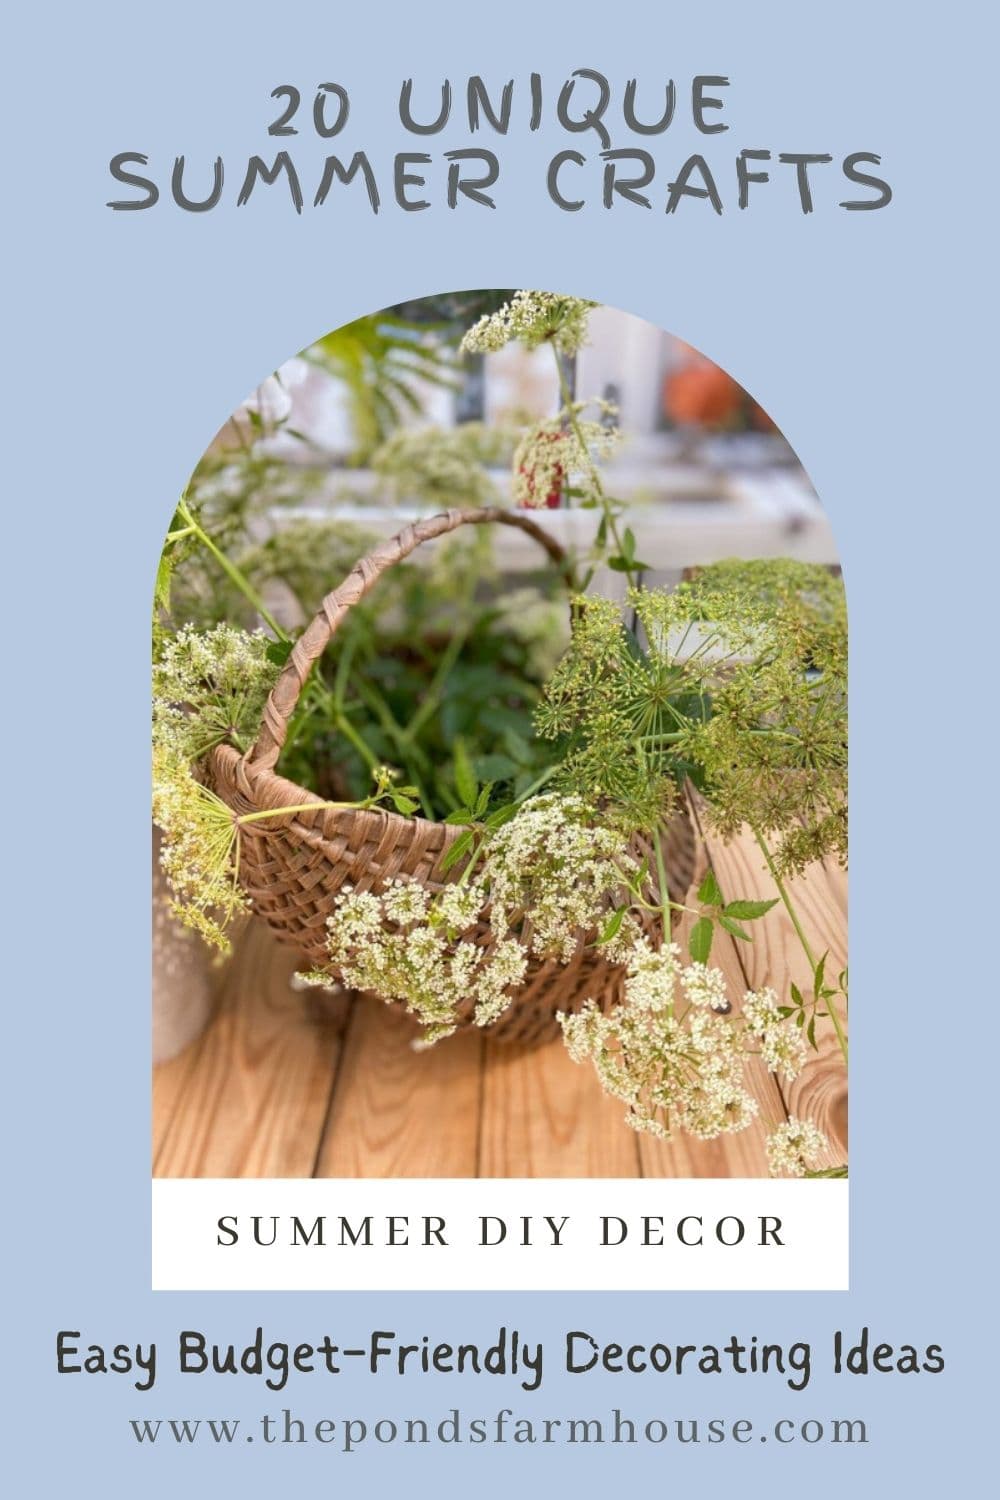 20 Summer Craft Ideas for budget-friendly summer decorating.  